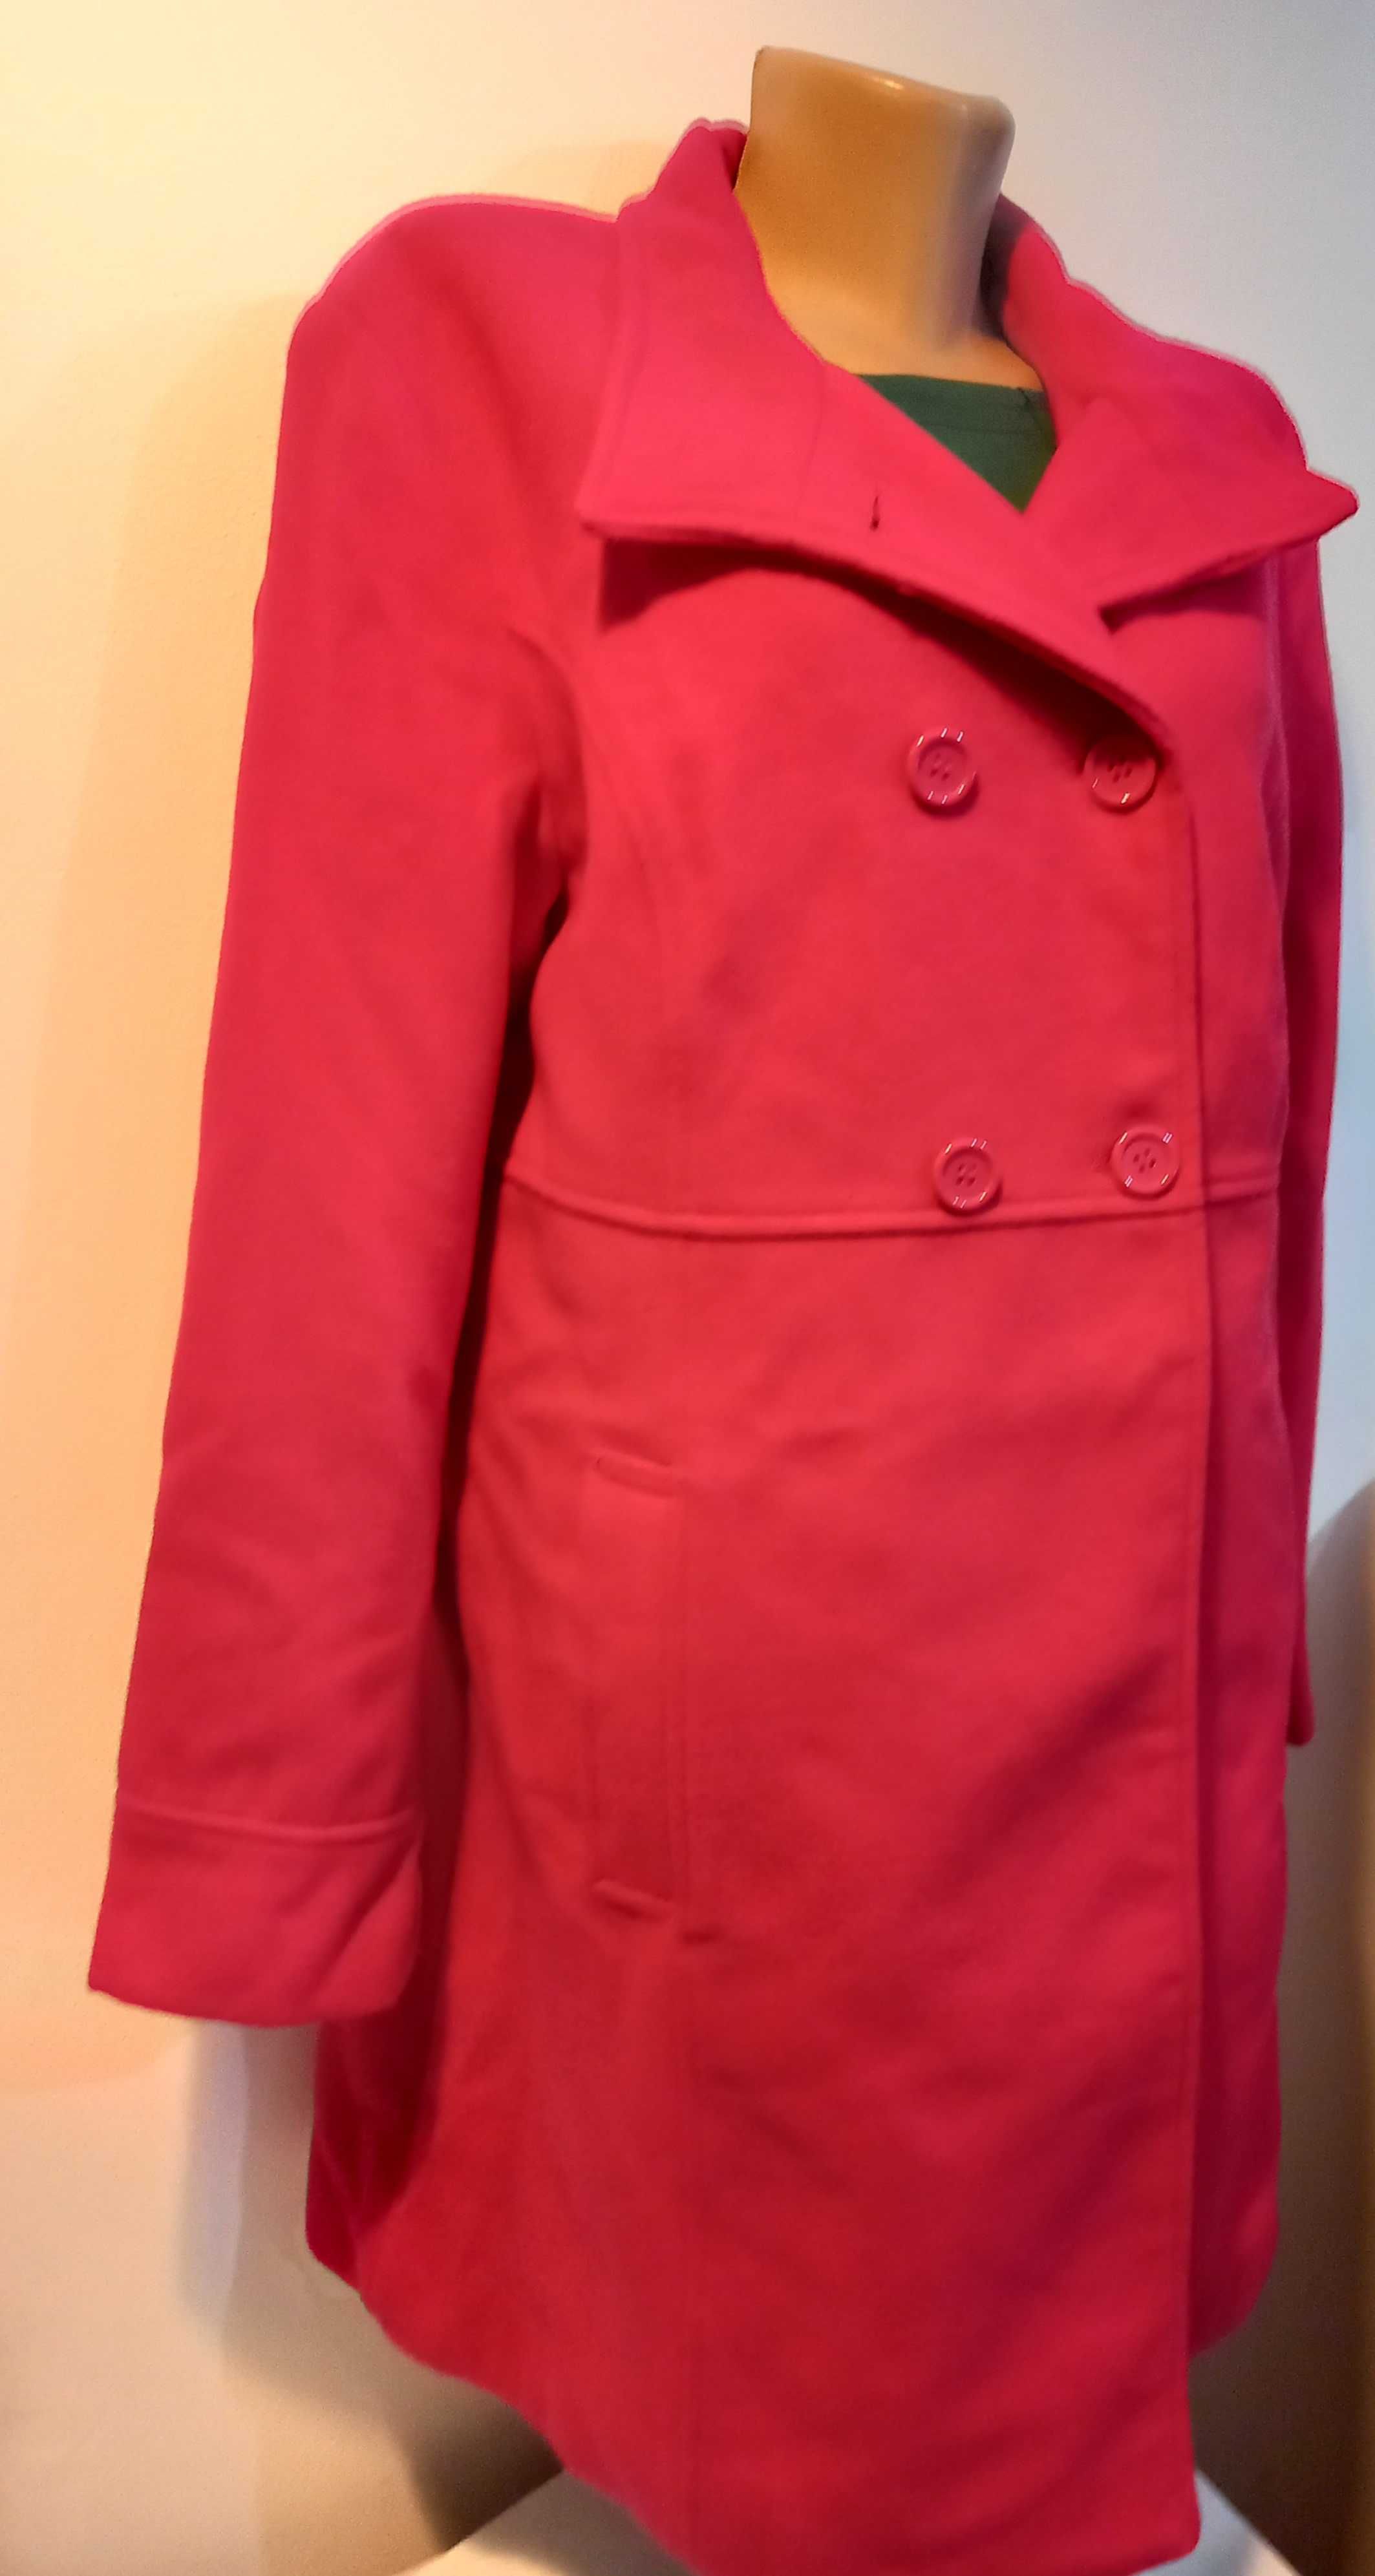 Palton damă nr.46 roz zmeură